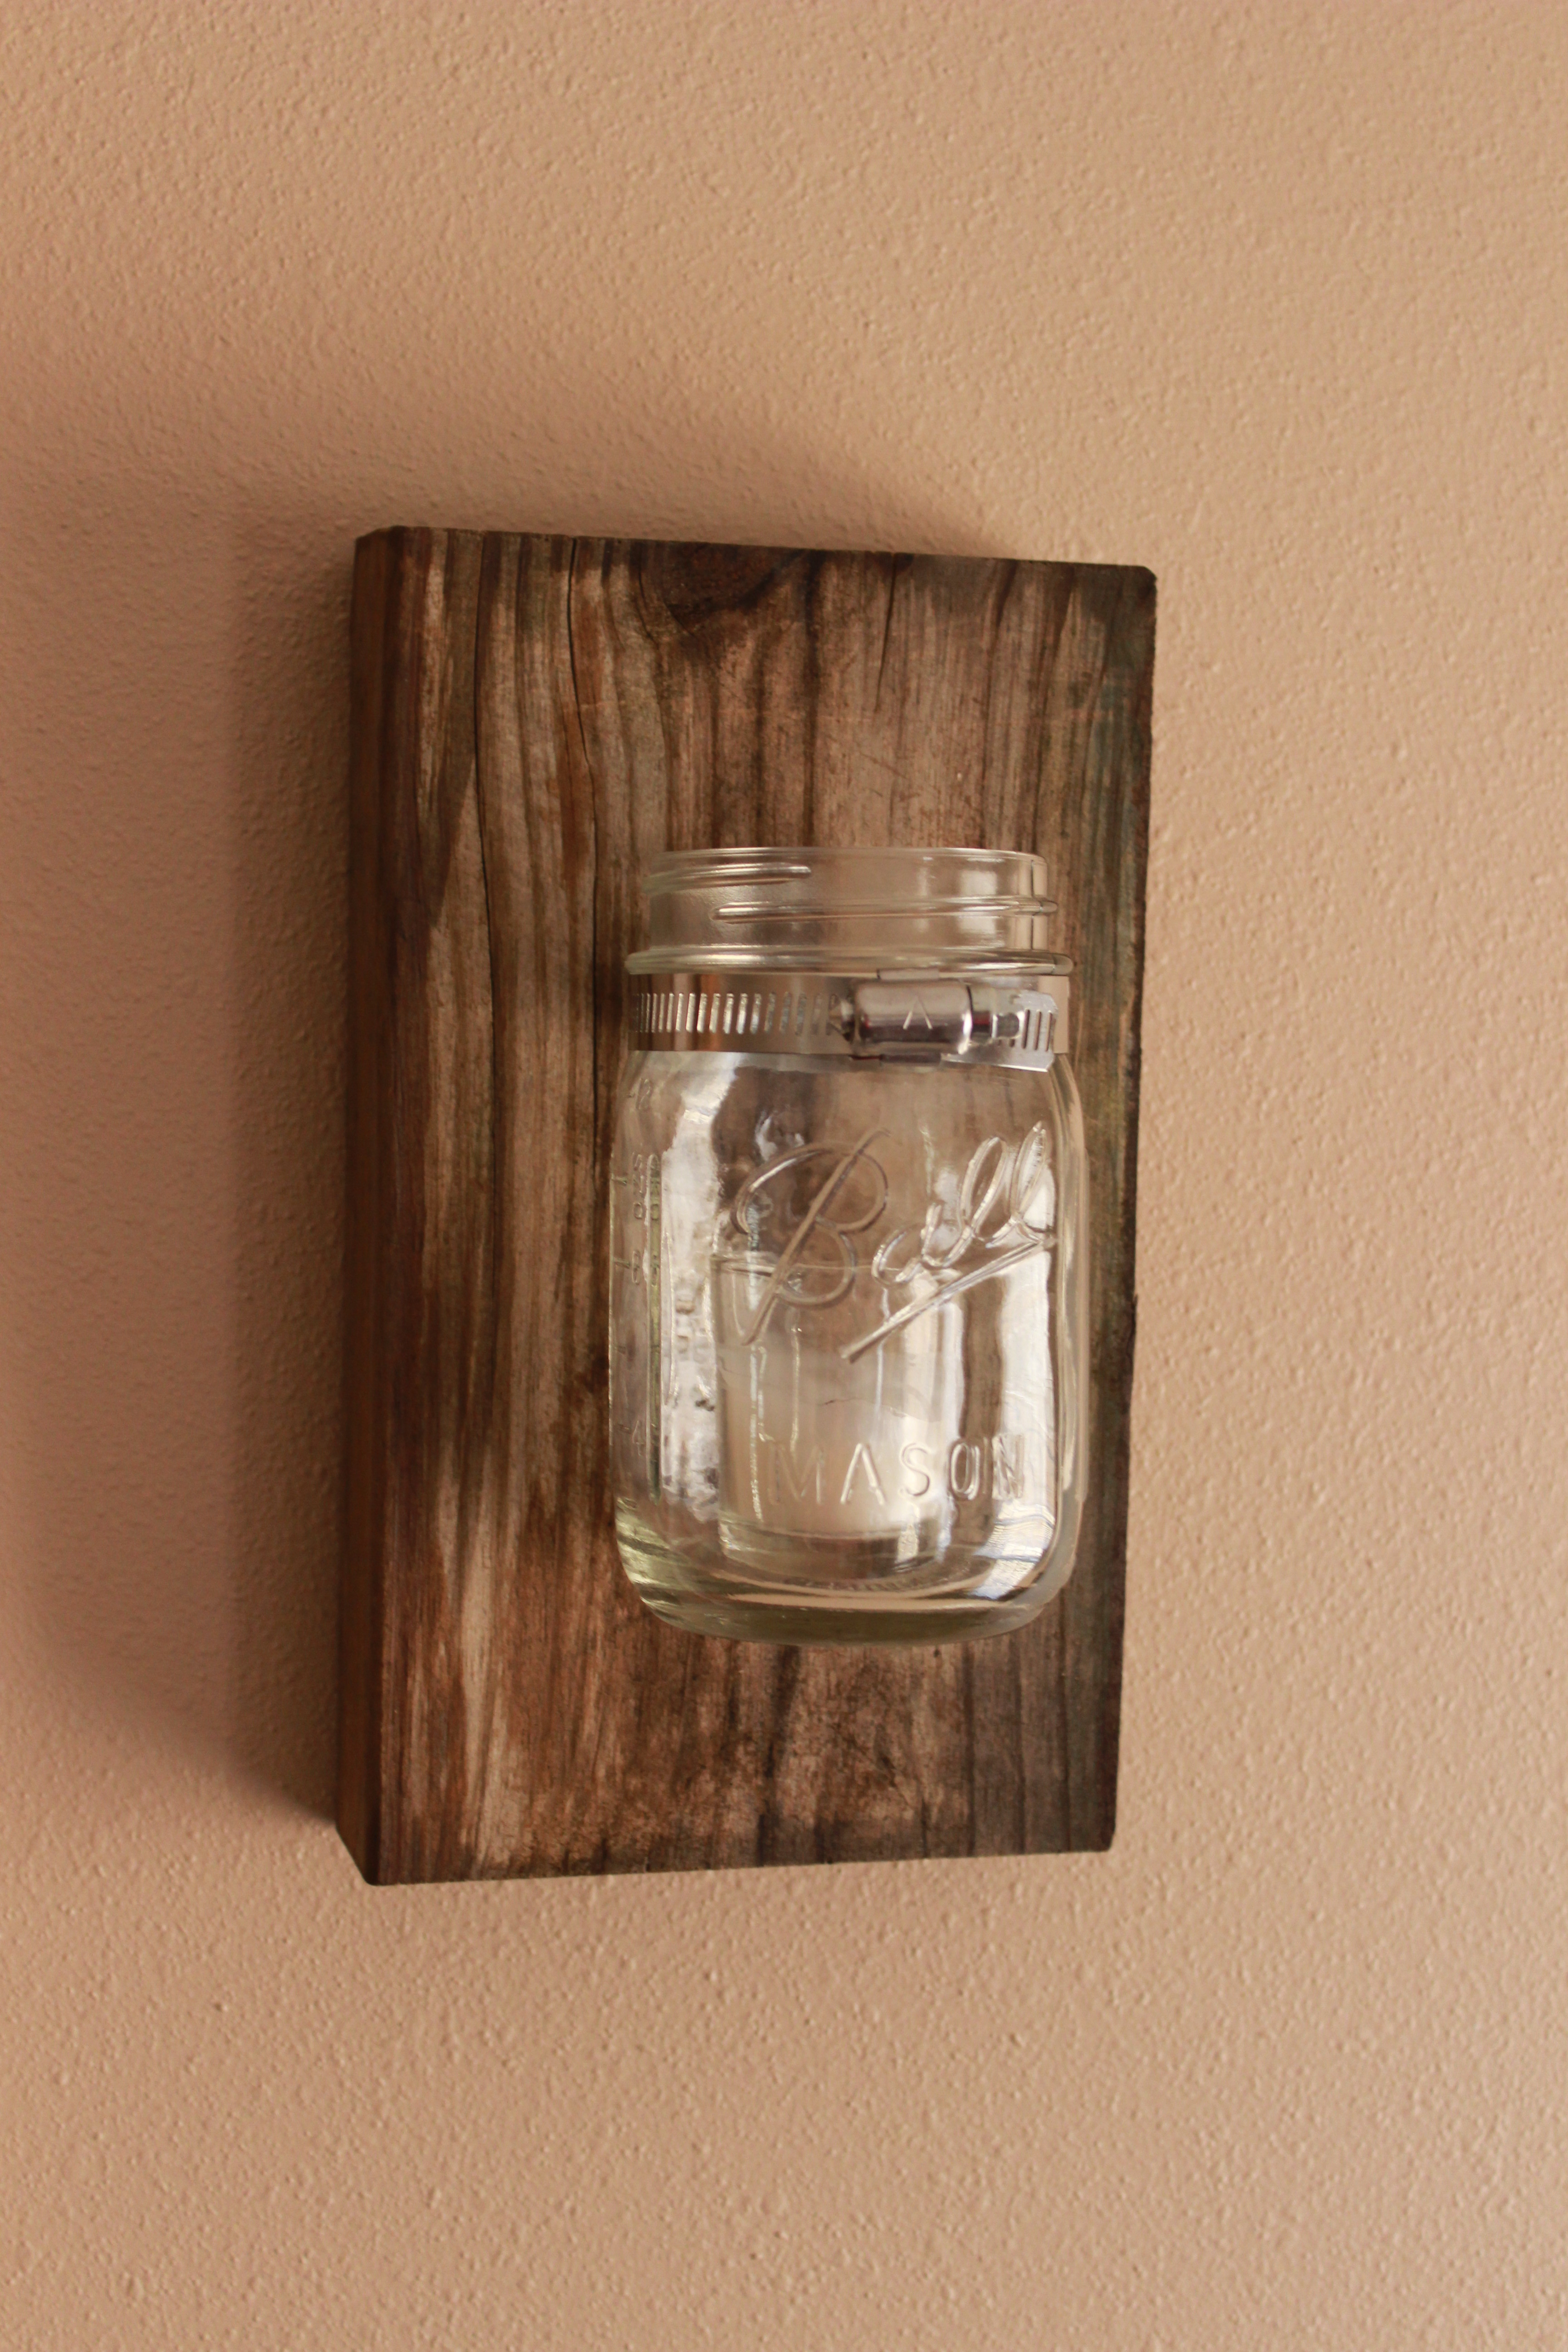 Best ideas about DIY Mason Jar Wall Decor
. Save or Pin DIY Mason Jar Wall Decor Now.